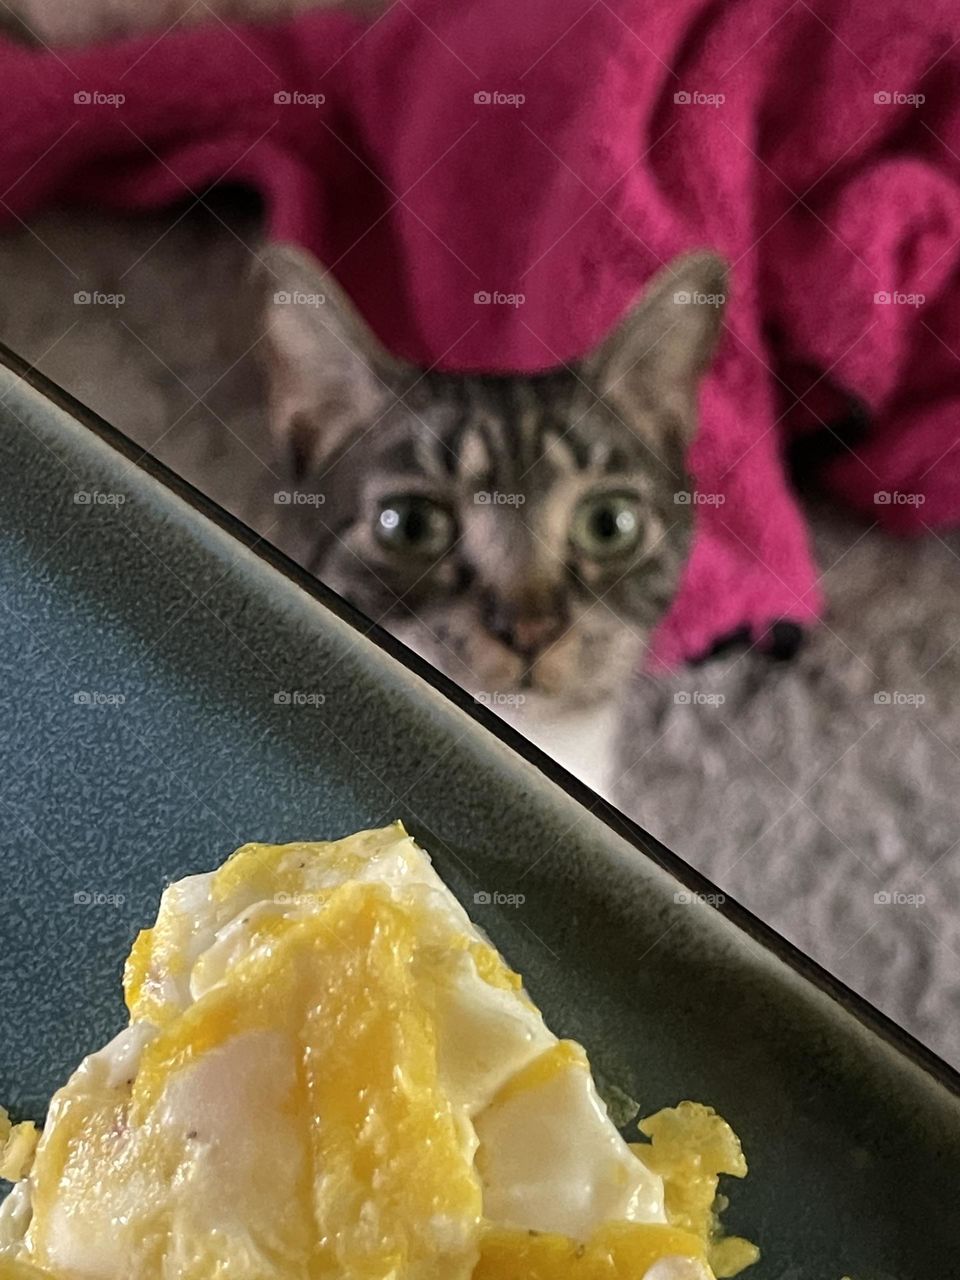 Dakari the cat sneaking a peek at my eggs